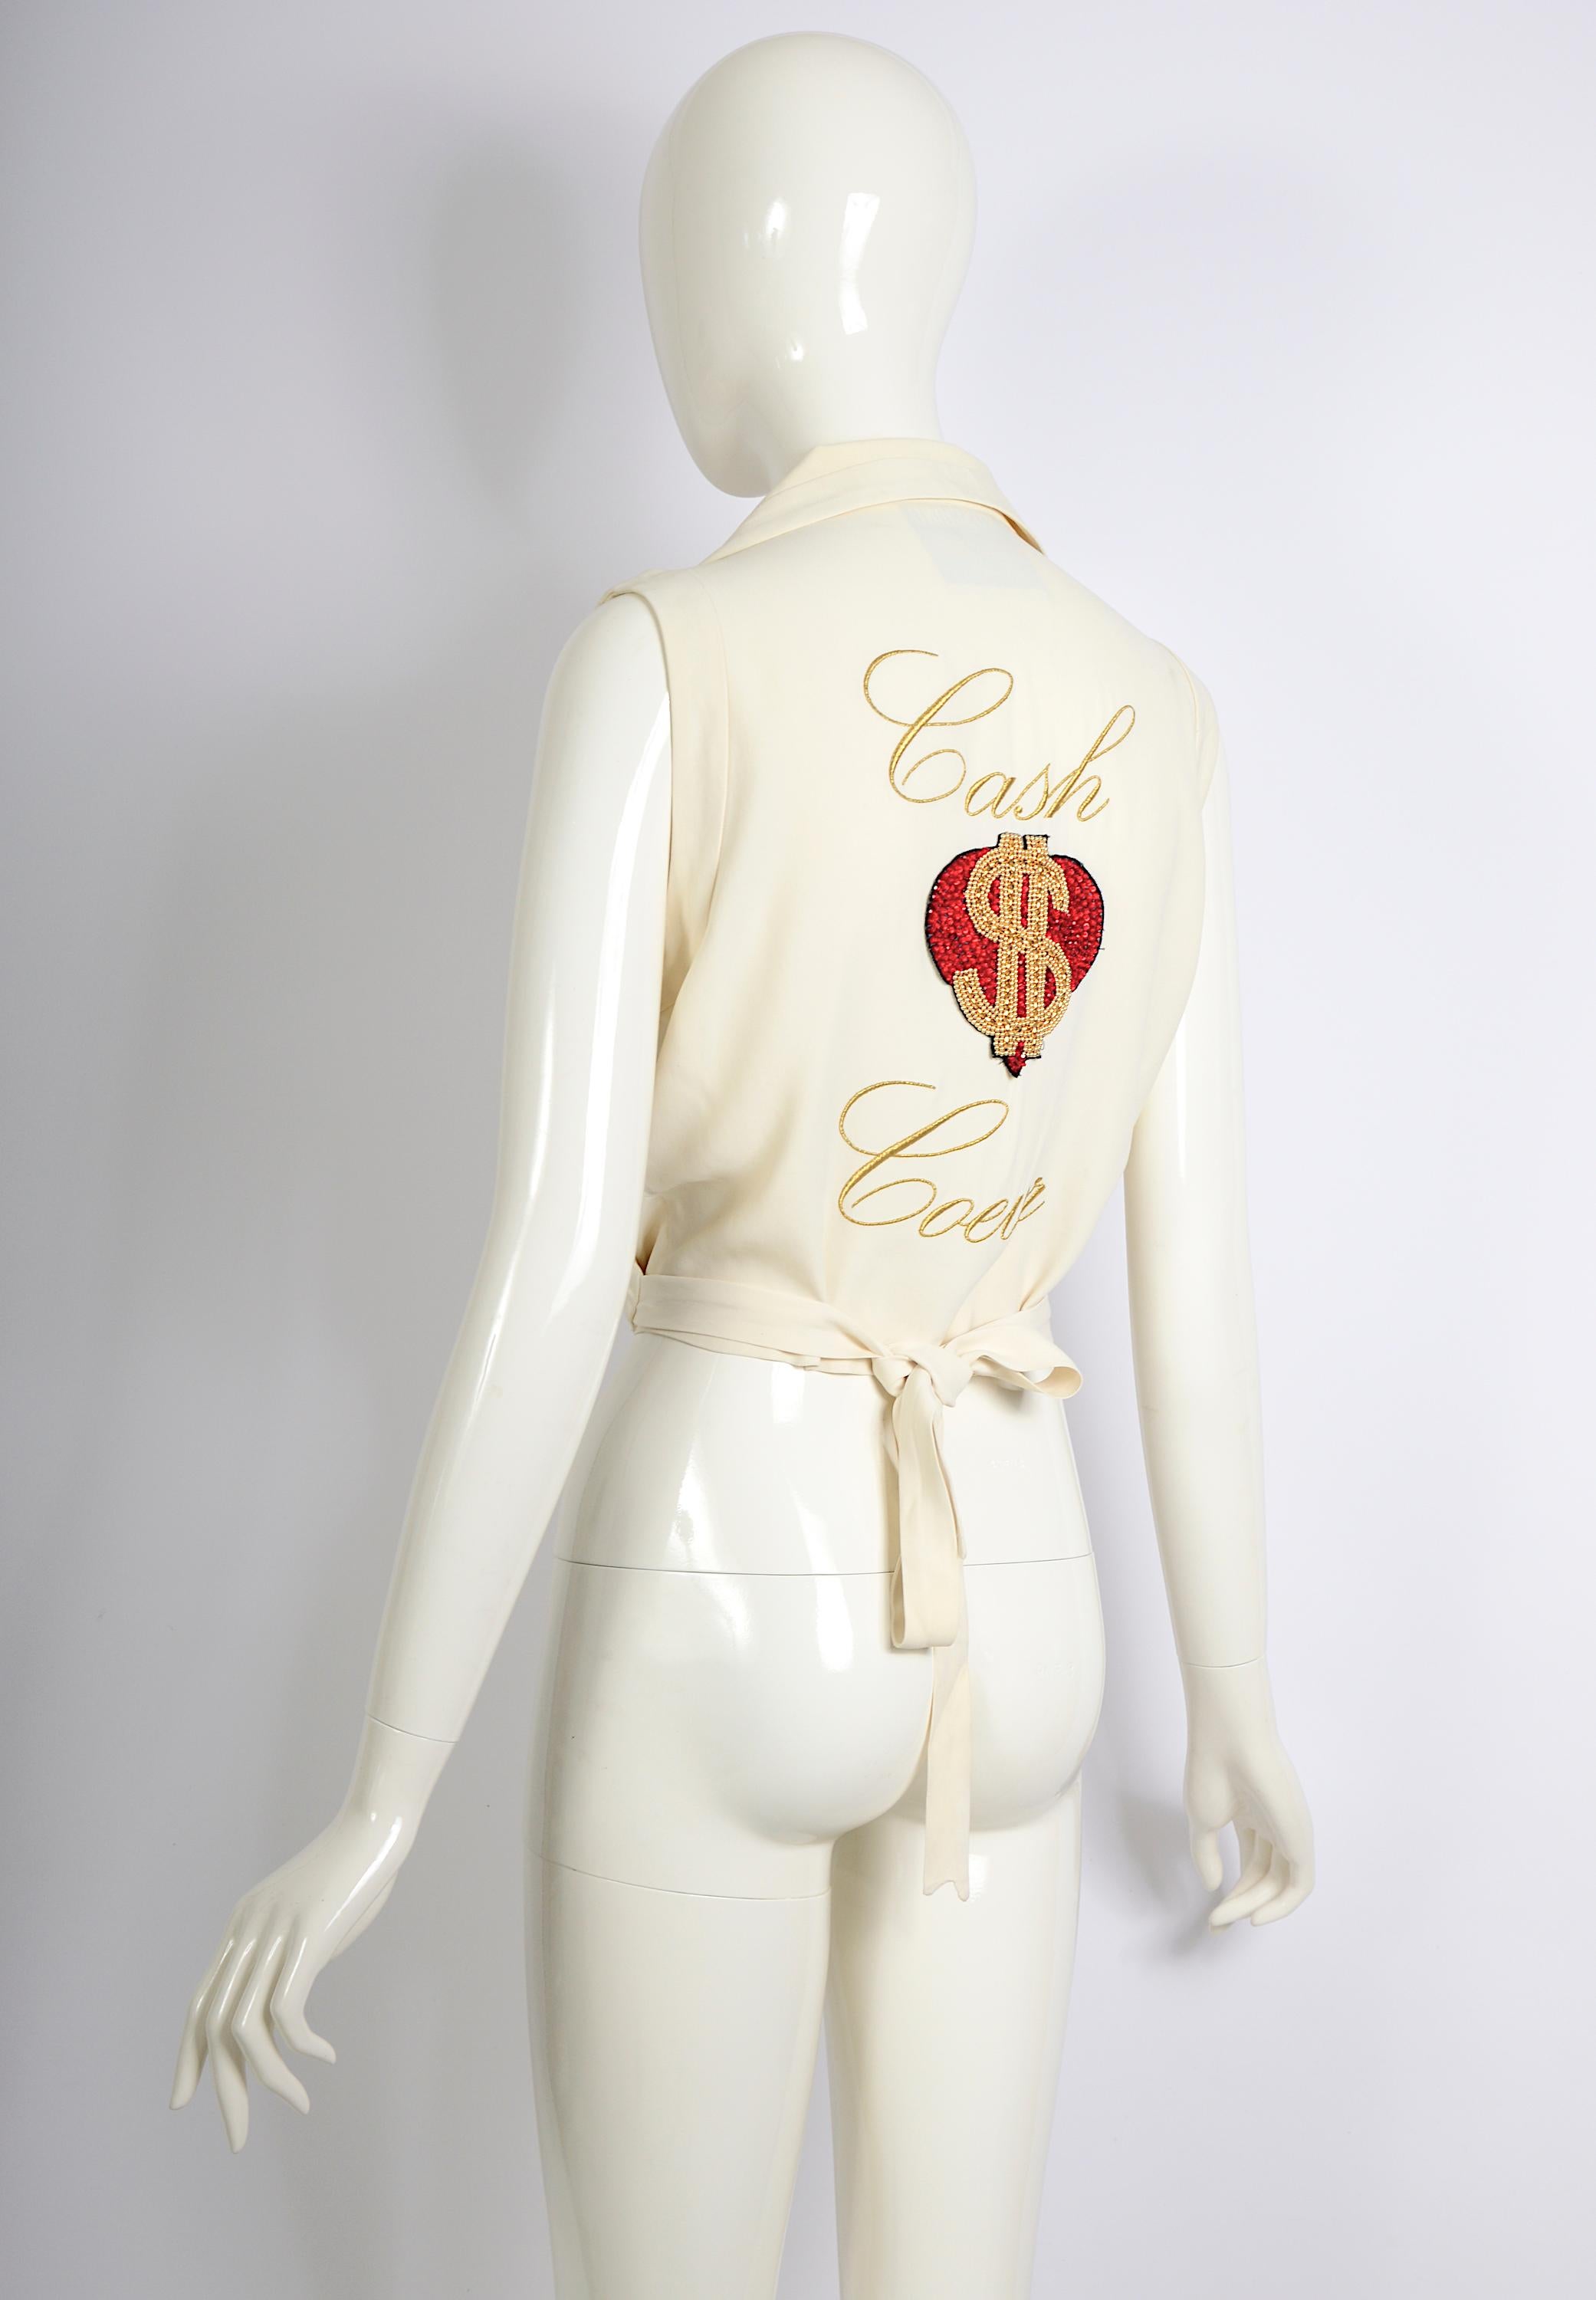  Moschino Couture collectionneur de collection vintage embelli « Cash coeur » crème en vente 2